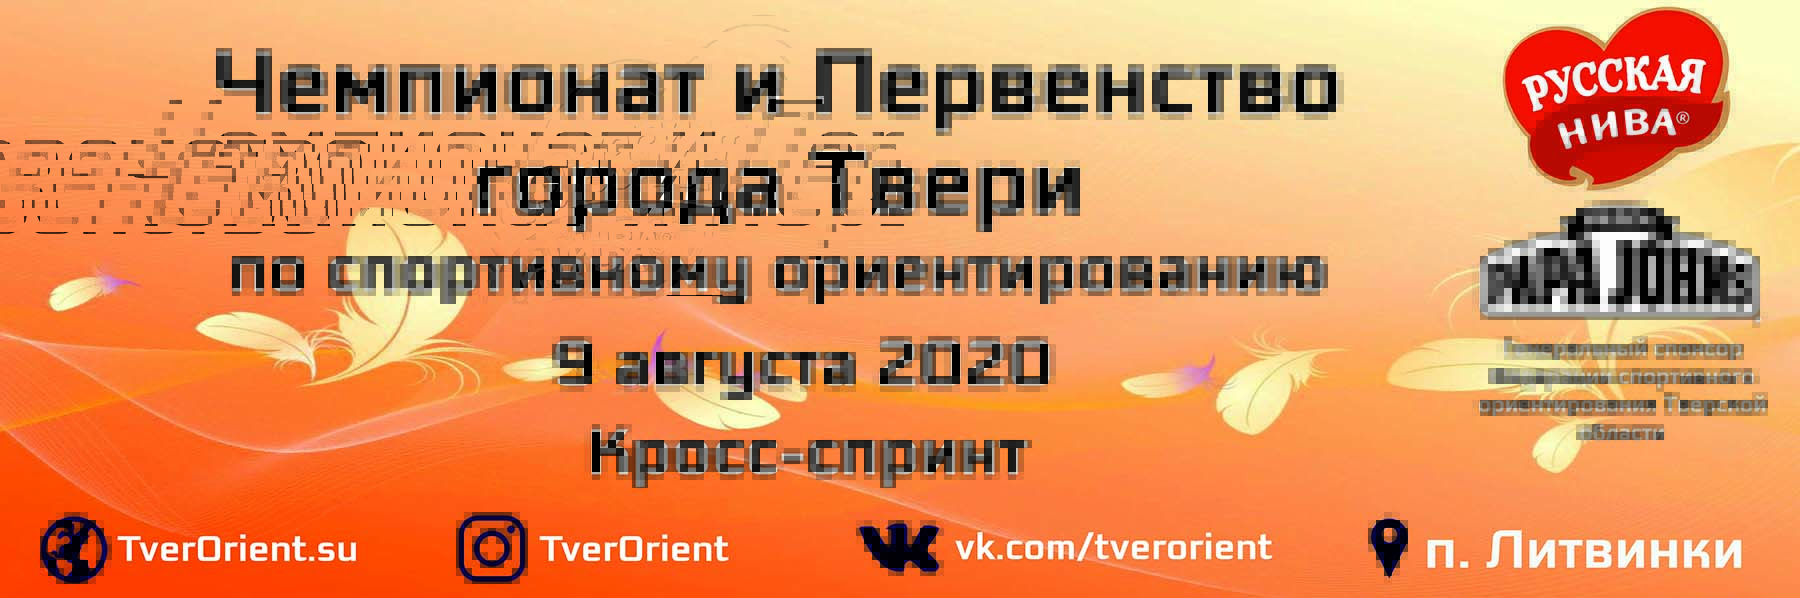 2020-08-09-logo.jpg